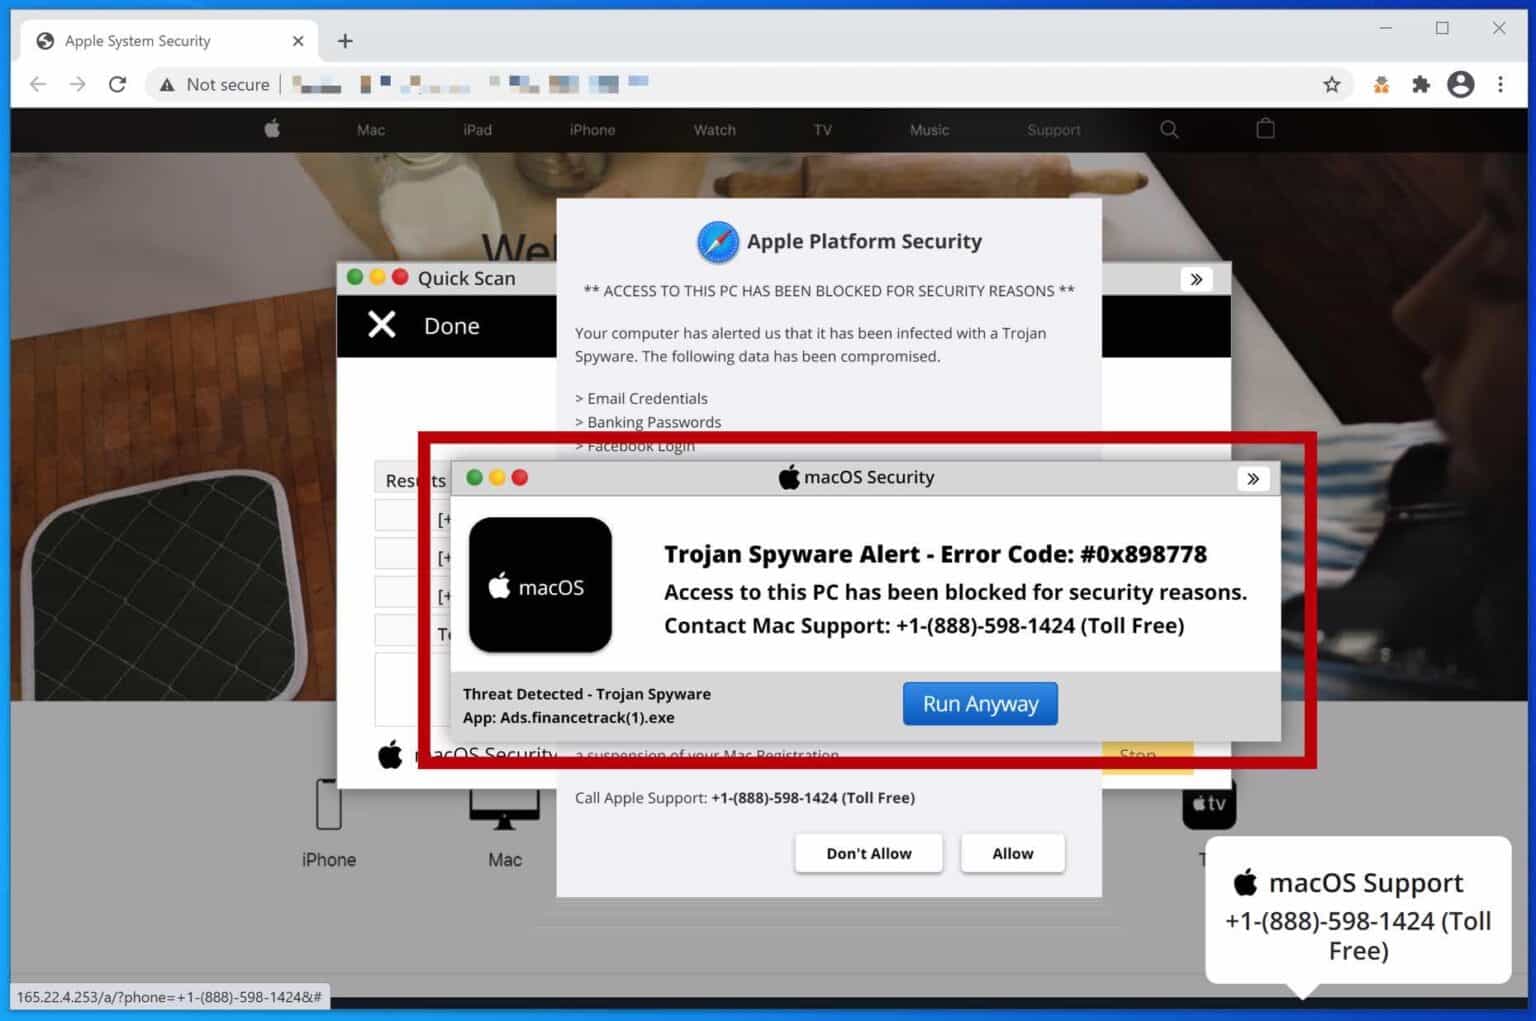 malware removal mac free download